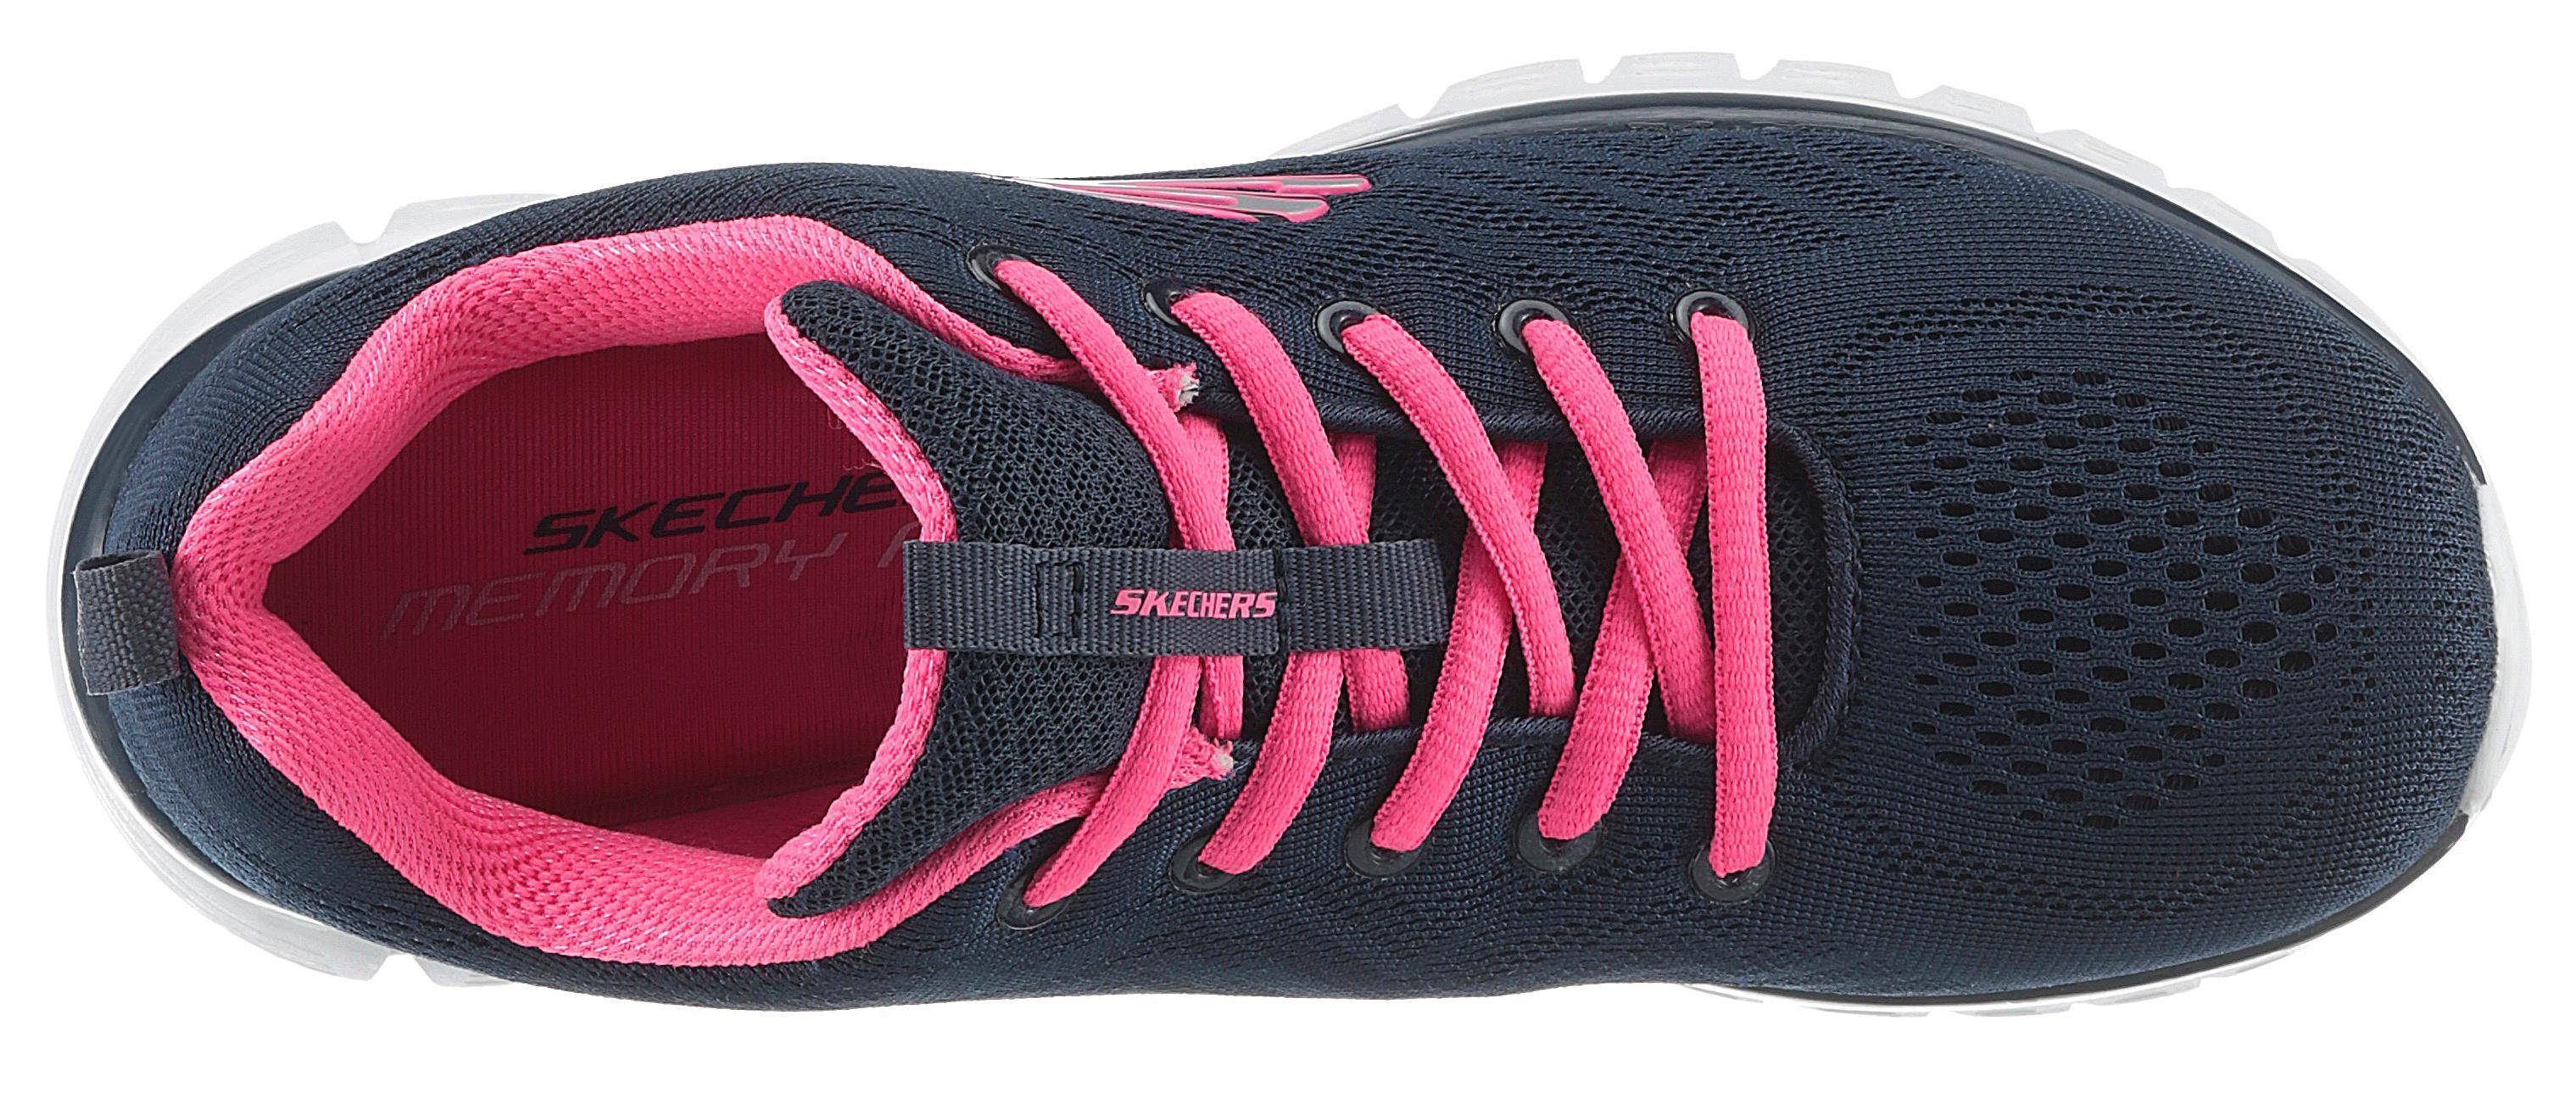 Foam navy-pink mit Skechers Get Connected Sneaker Memory - durch Graceful Dämpfung